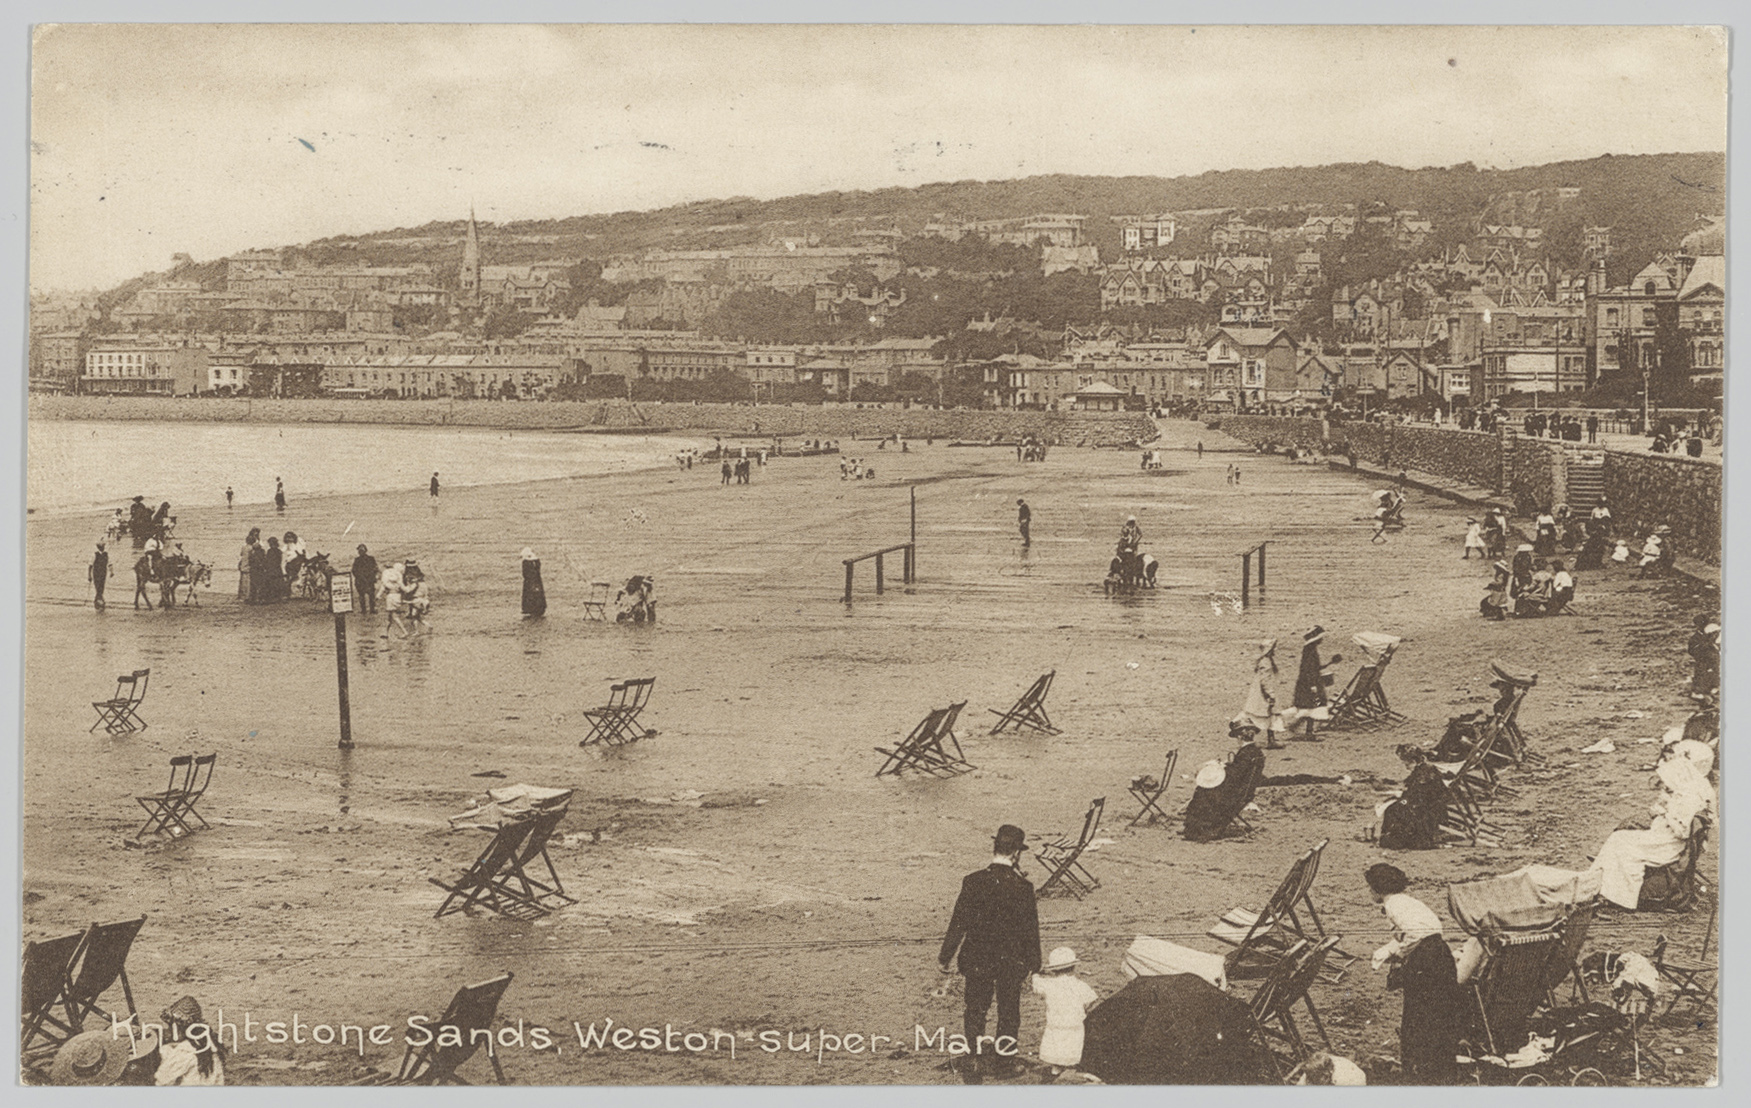 ‘Knightstone Sands, Weston-super-Mare’ Postcard, 1914, PH64W/40c